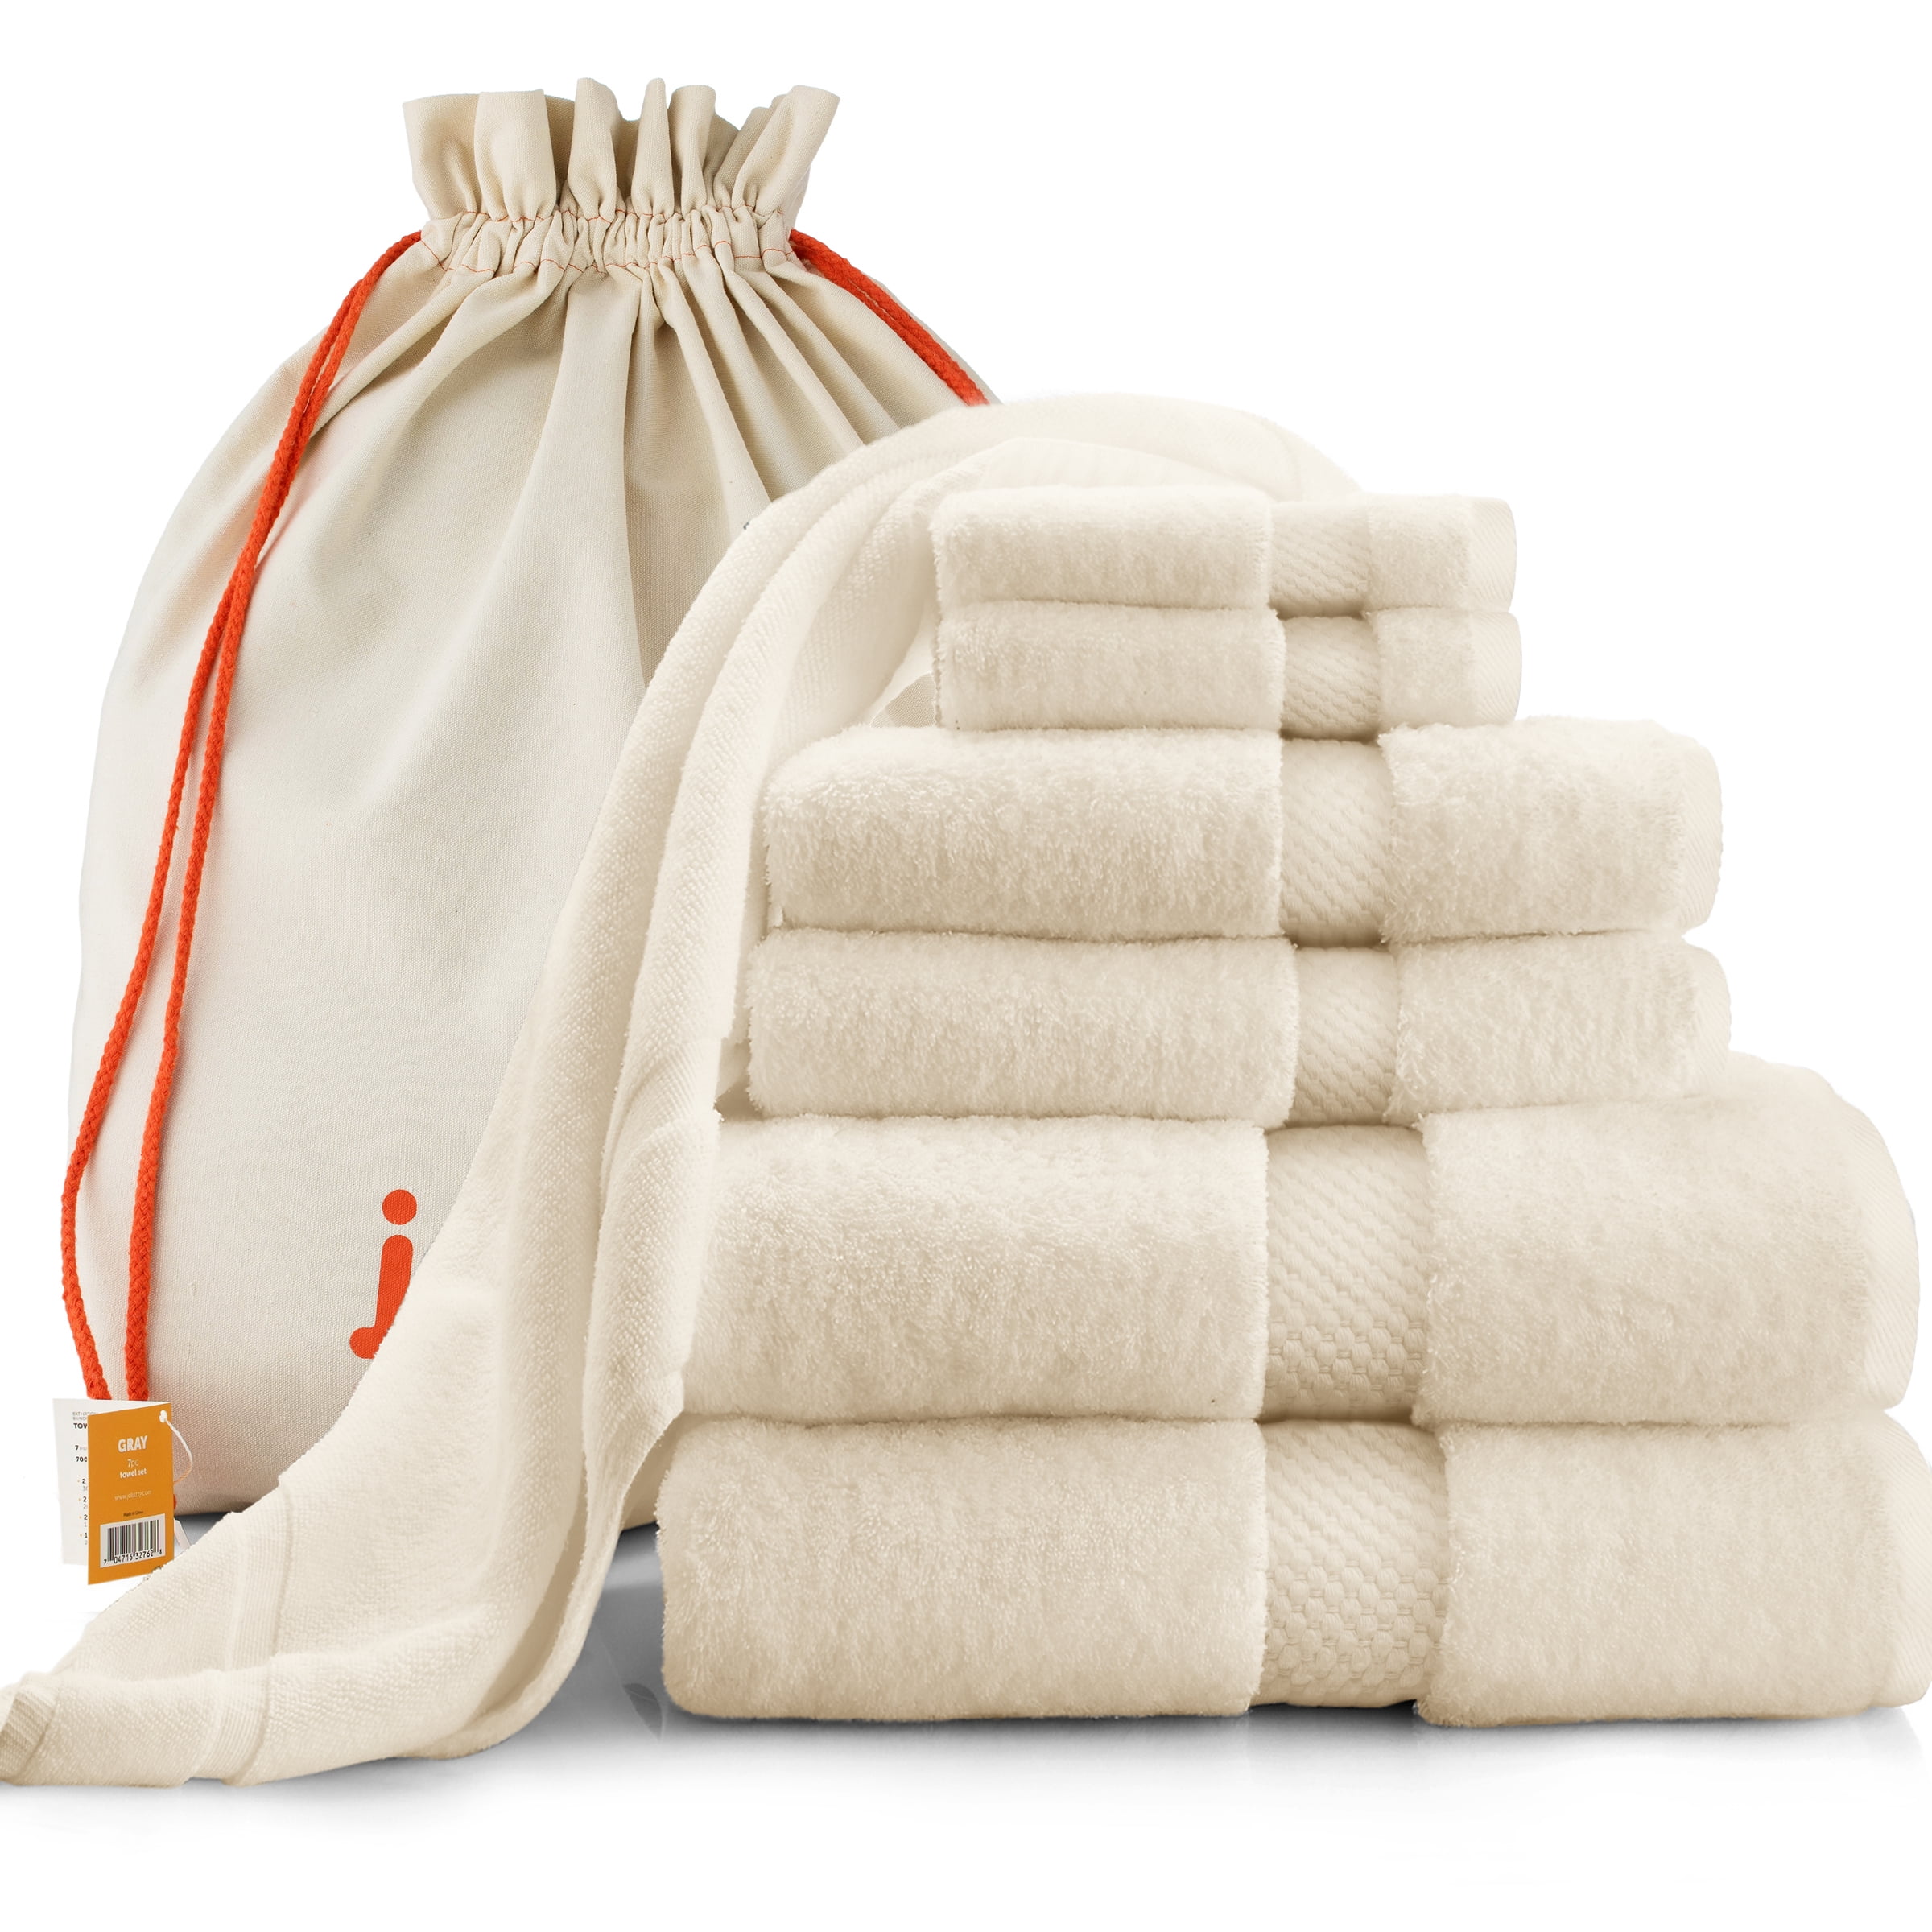 100% Cotton Large Hotel Quality Bath Towel Set Soft & Absorbent Violet Towels Pleasant Home Luxury Bath Towels Set 600 GSM Towels for Bathroom 4 Pack – 27” x 54” Bathroom Towels